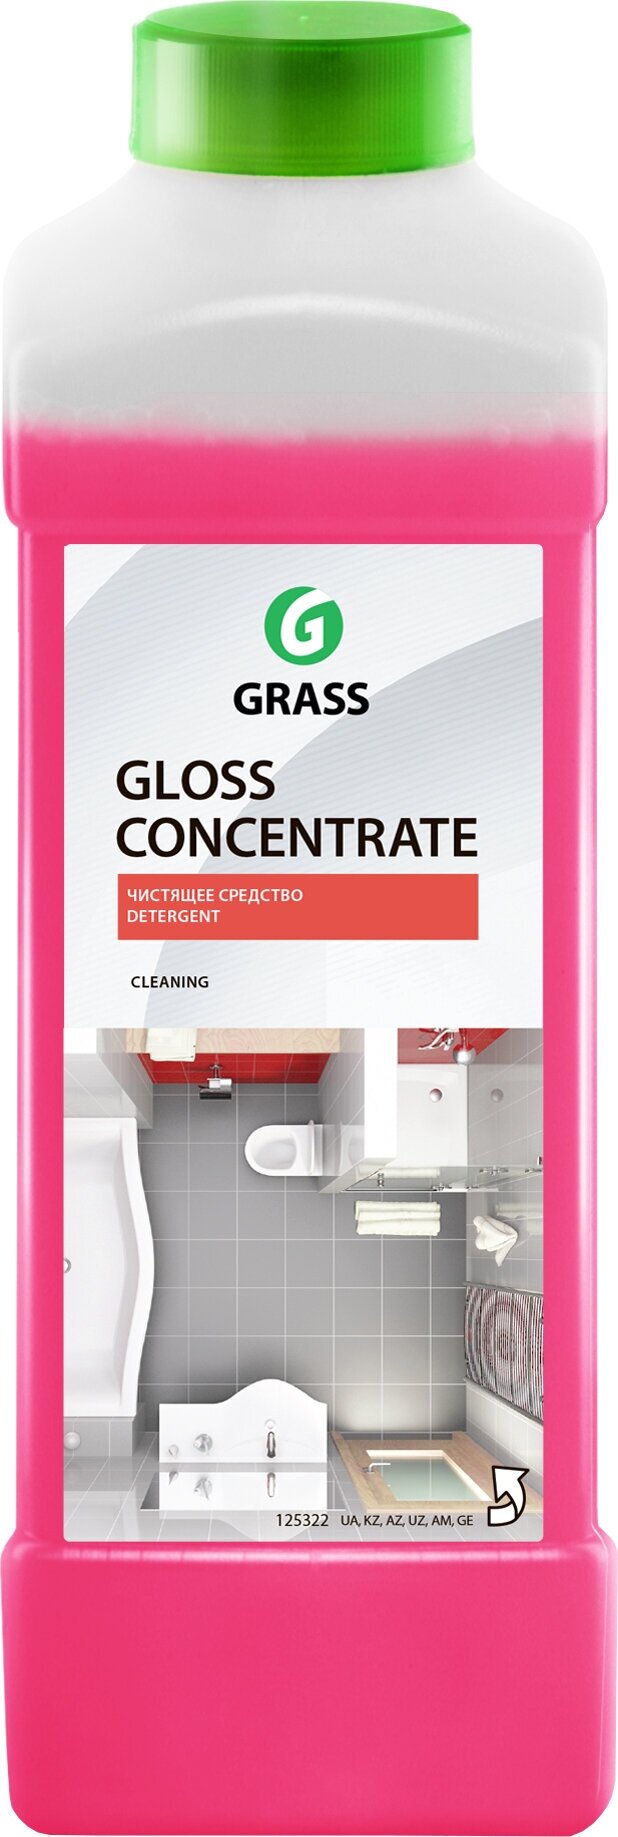 Grass концентрат Gloss Concentrate, 1 кг - фотография № 18